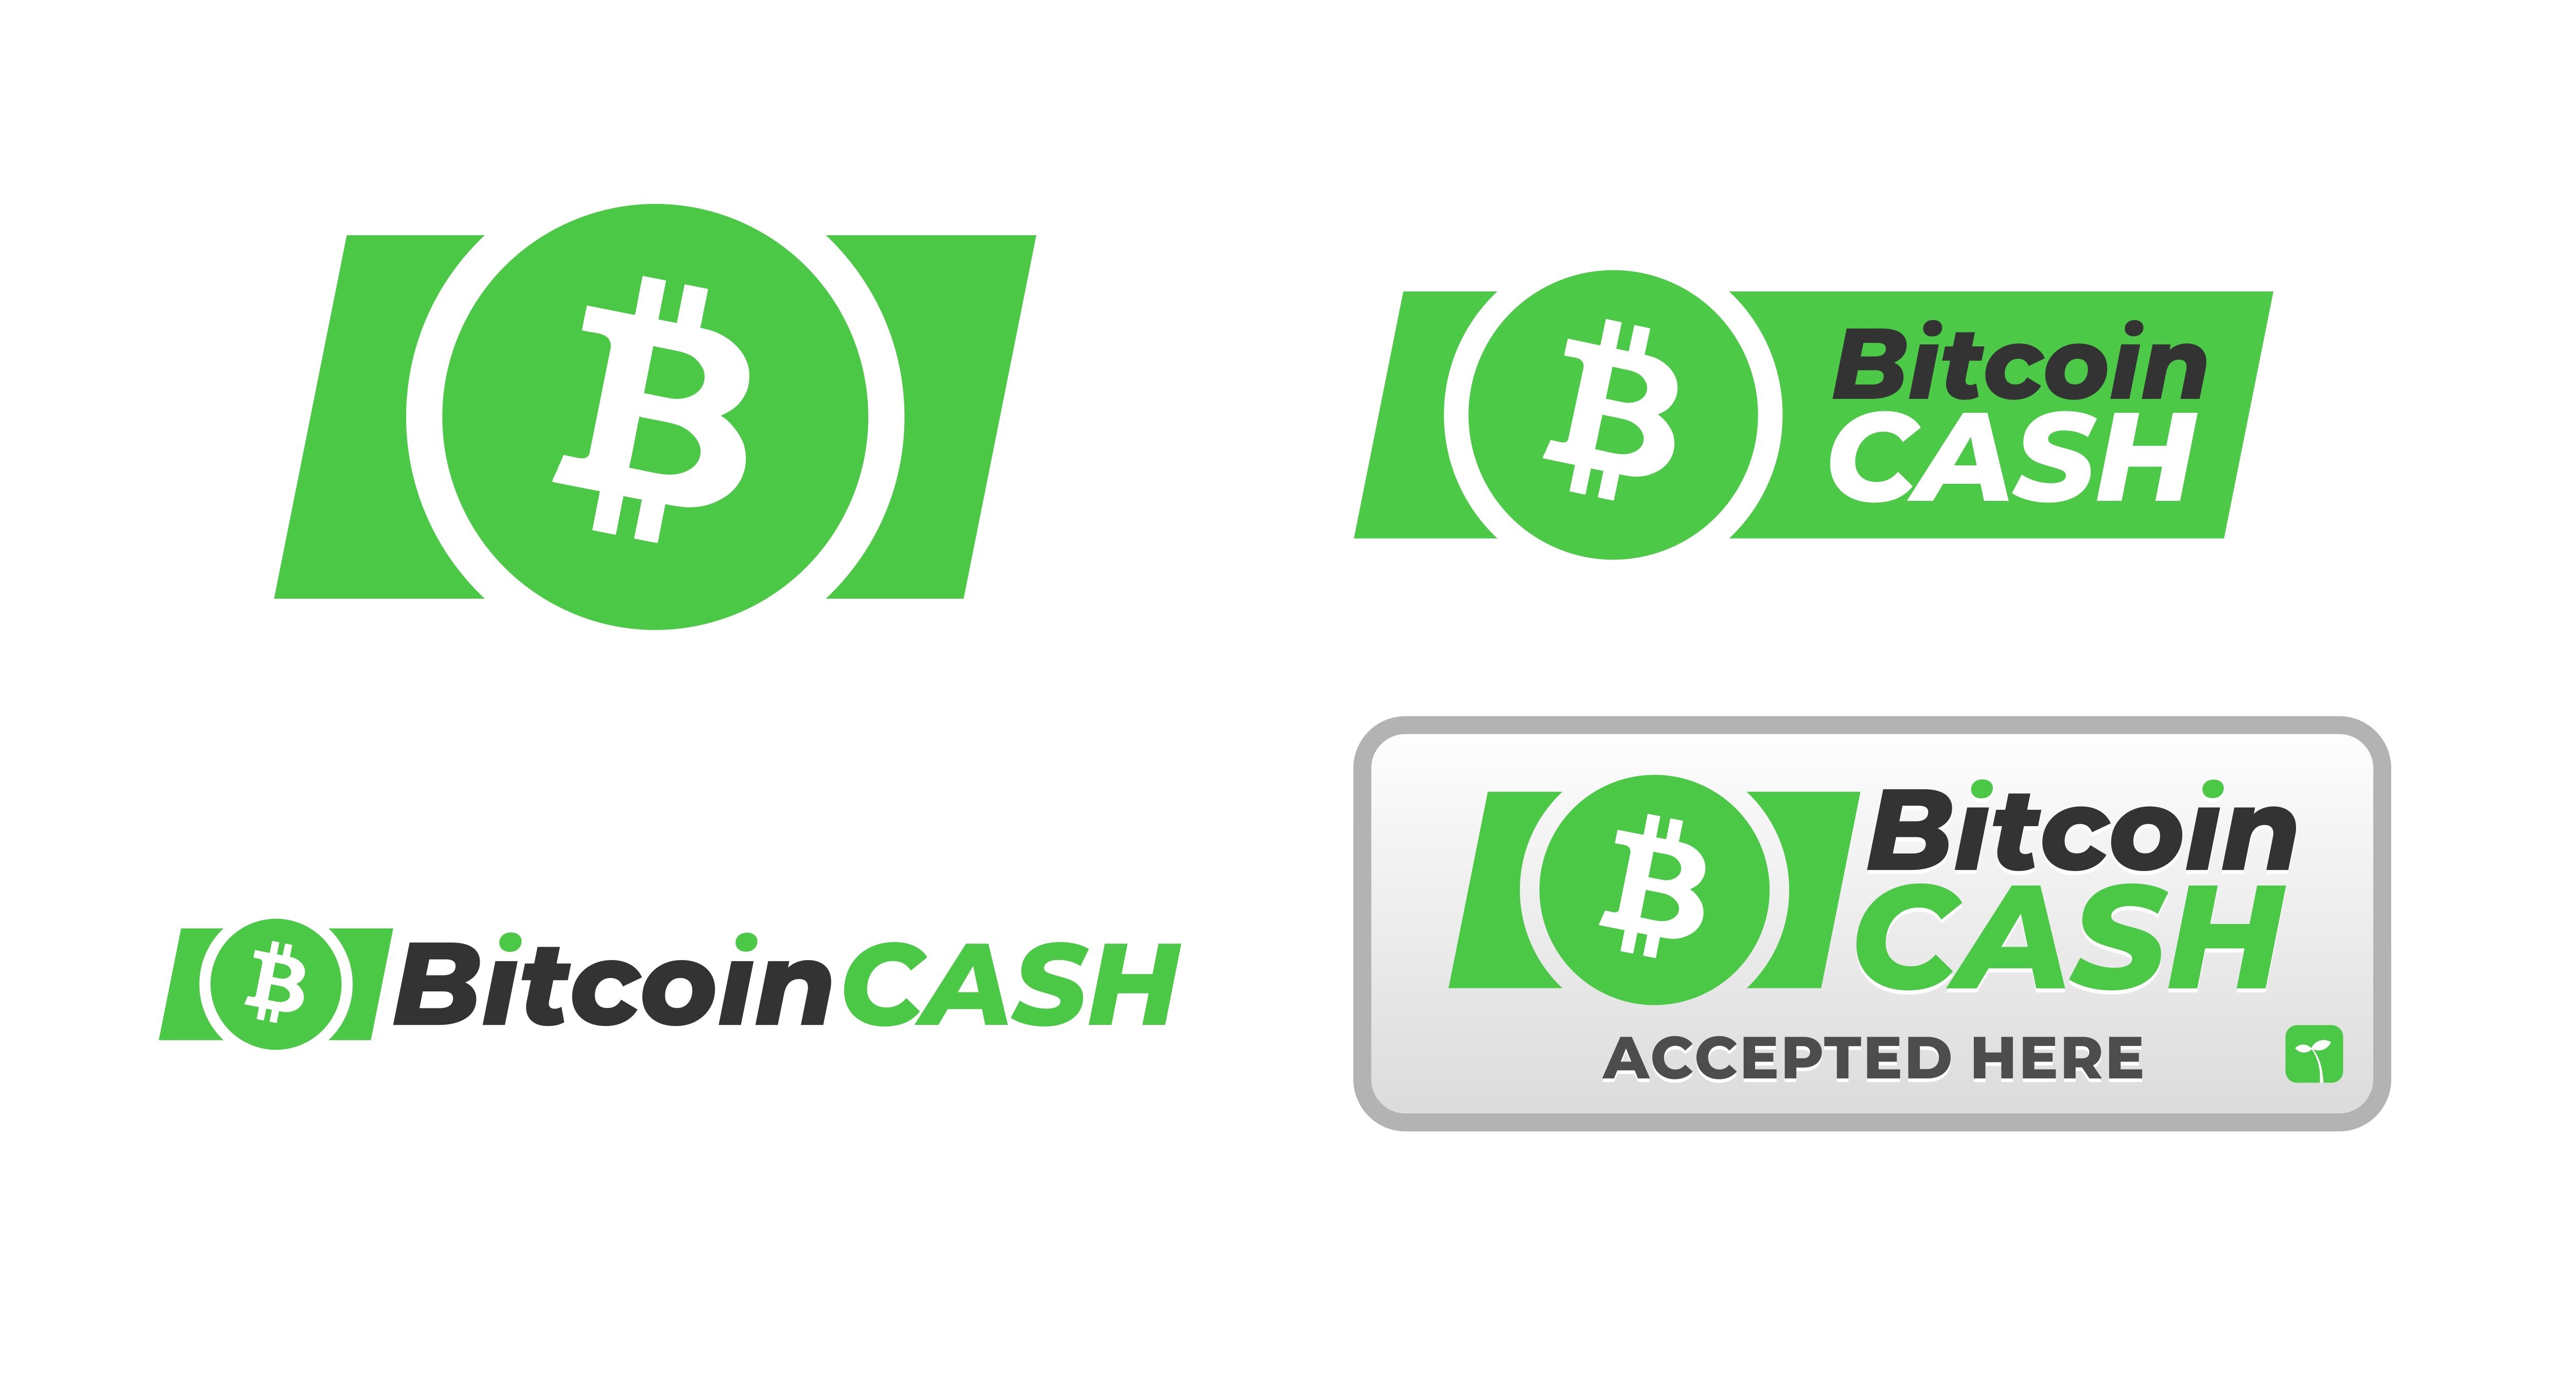 Cash -Only Logo - Bitcoin Cash Logos produced by the BCF. : btc